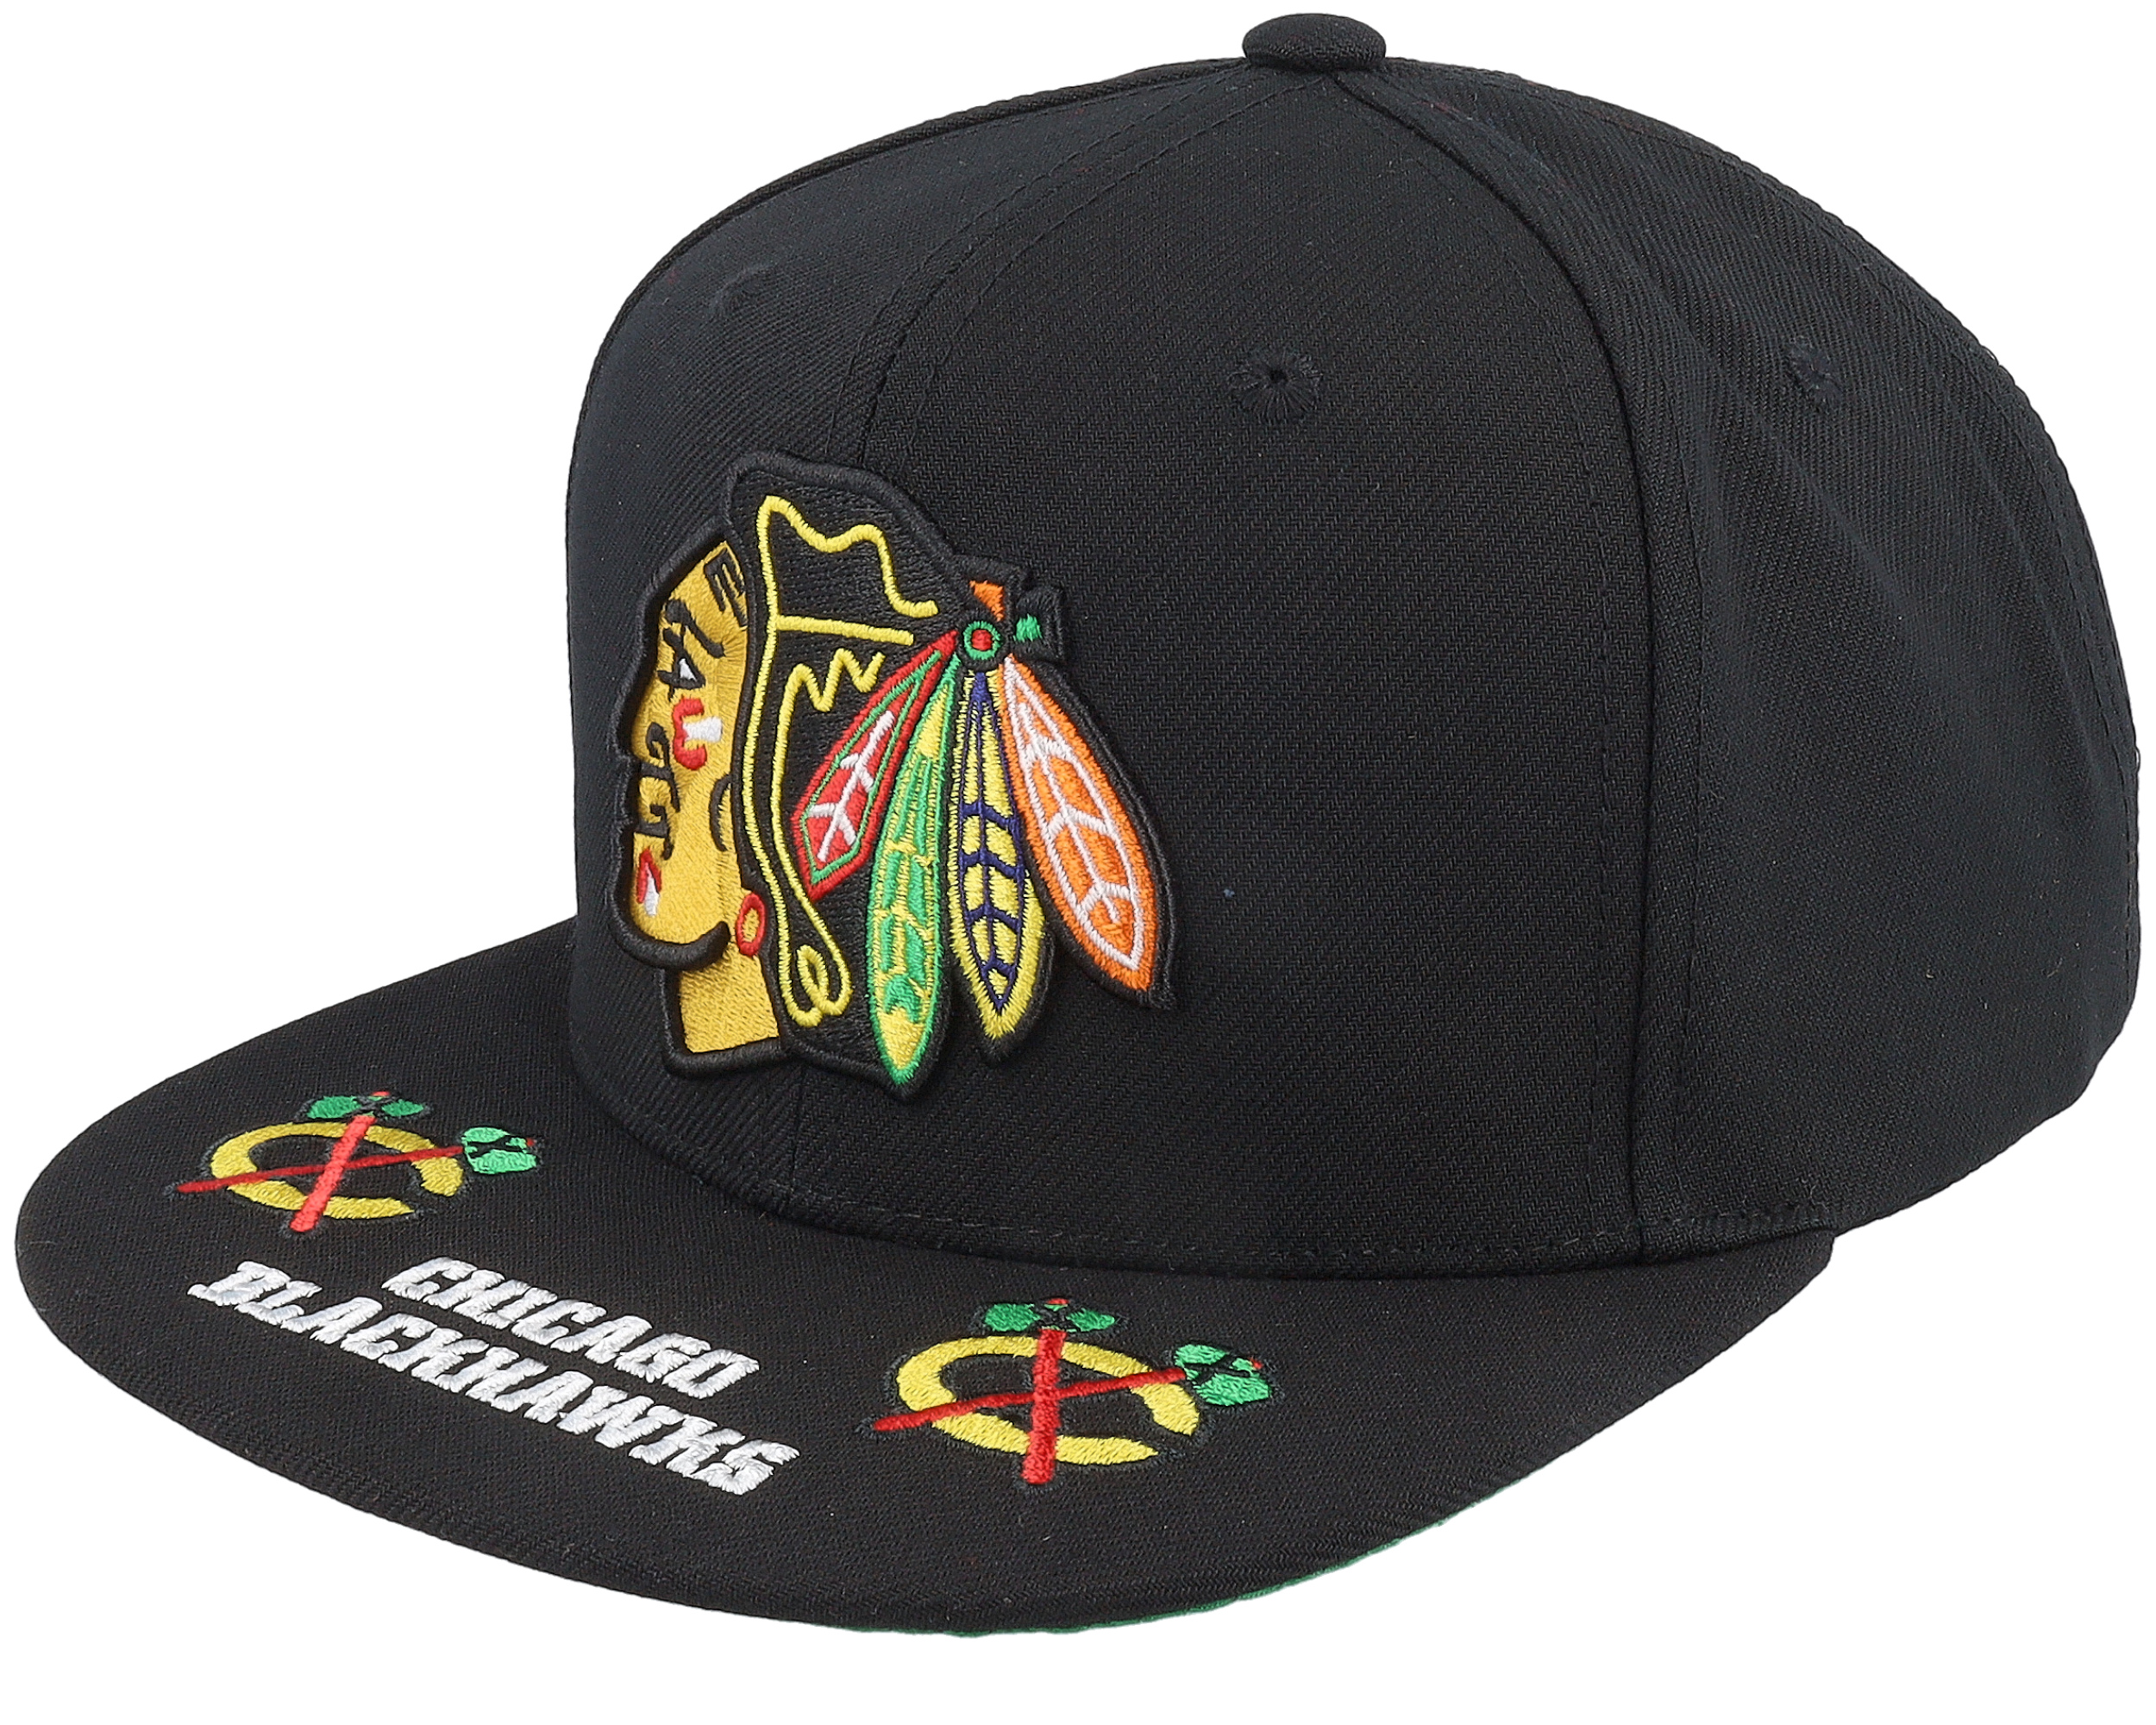 Mitchell & Ness Chicago Blackhawks Vintage Fitted Hat Black